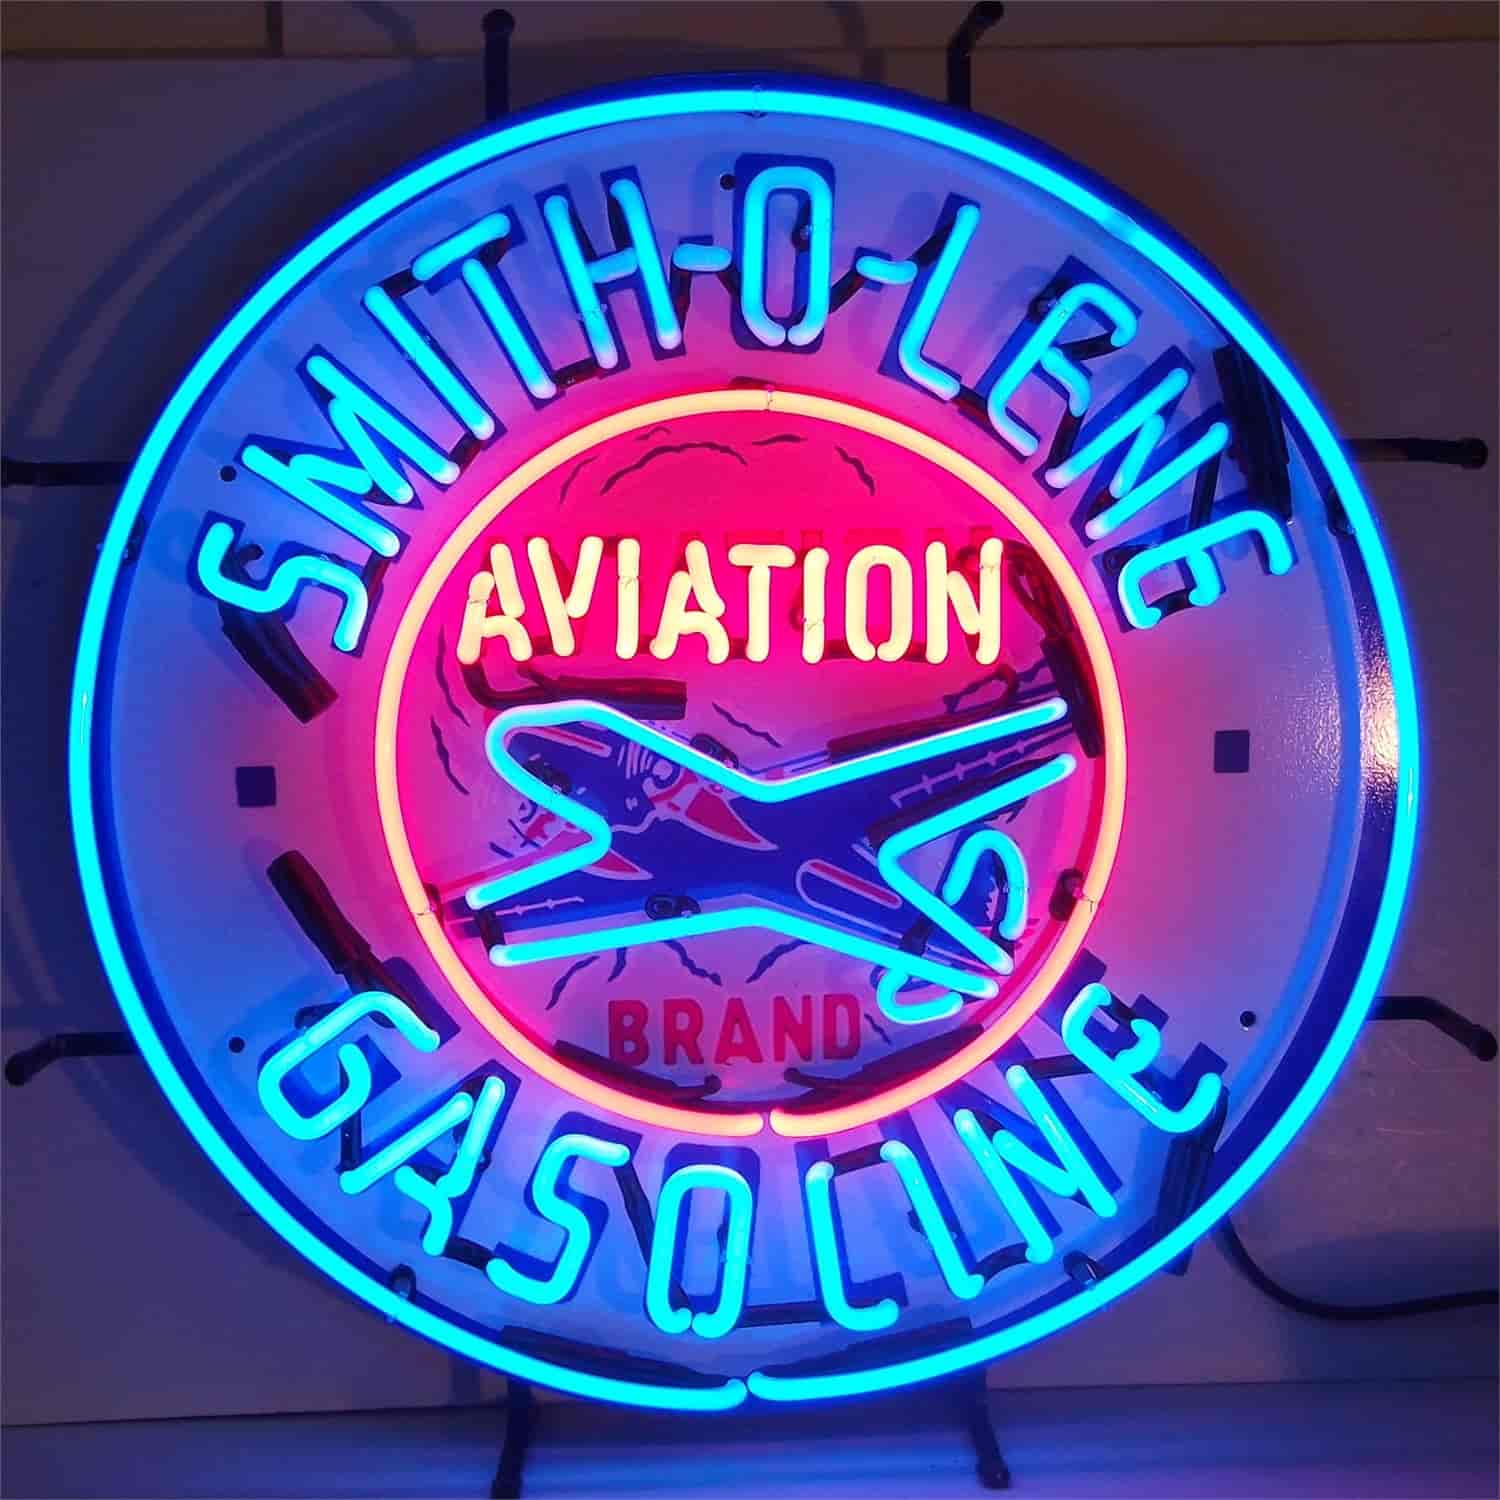 Smith-O-Lene Aviation Gasoline Neon Sign